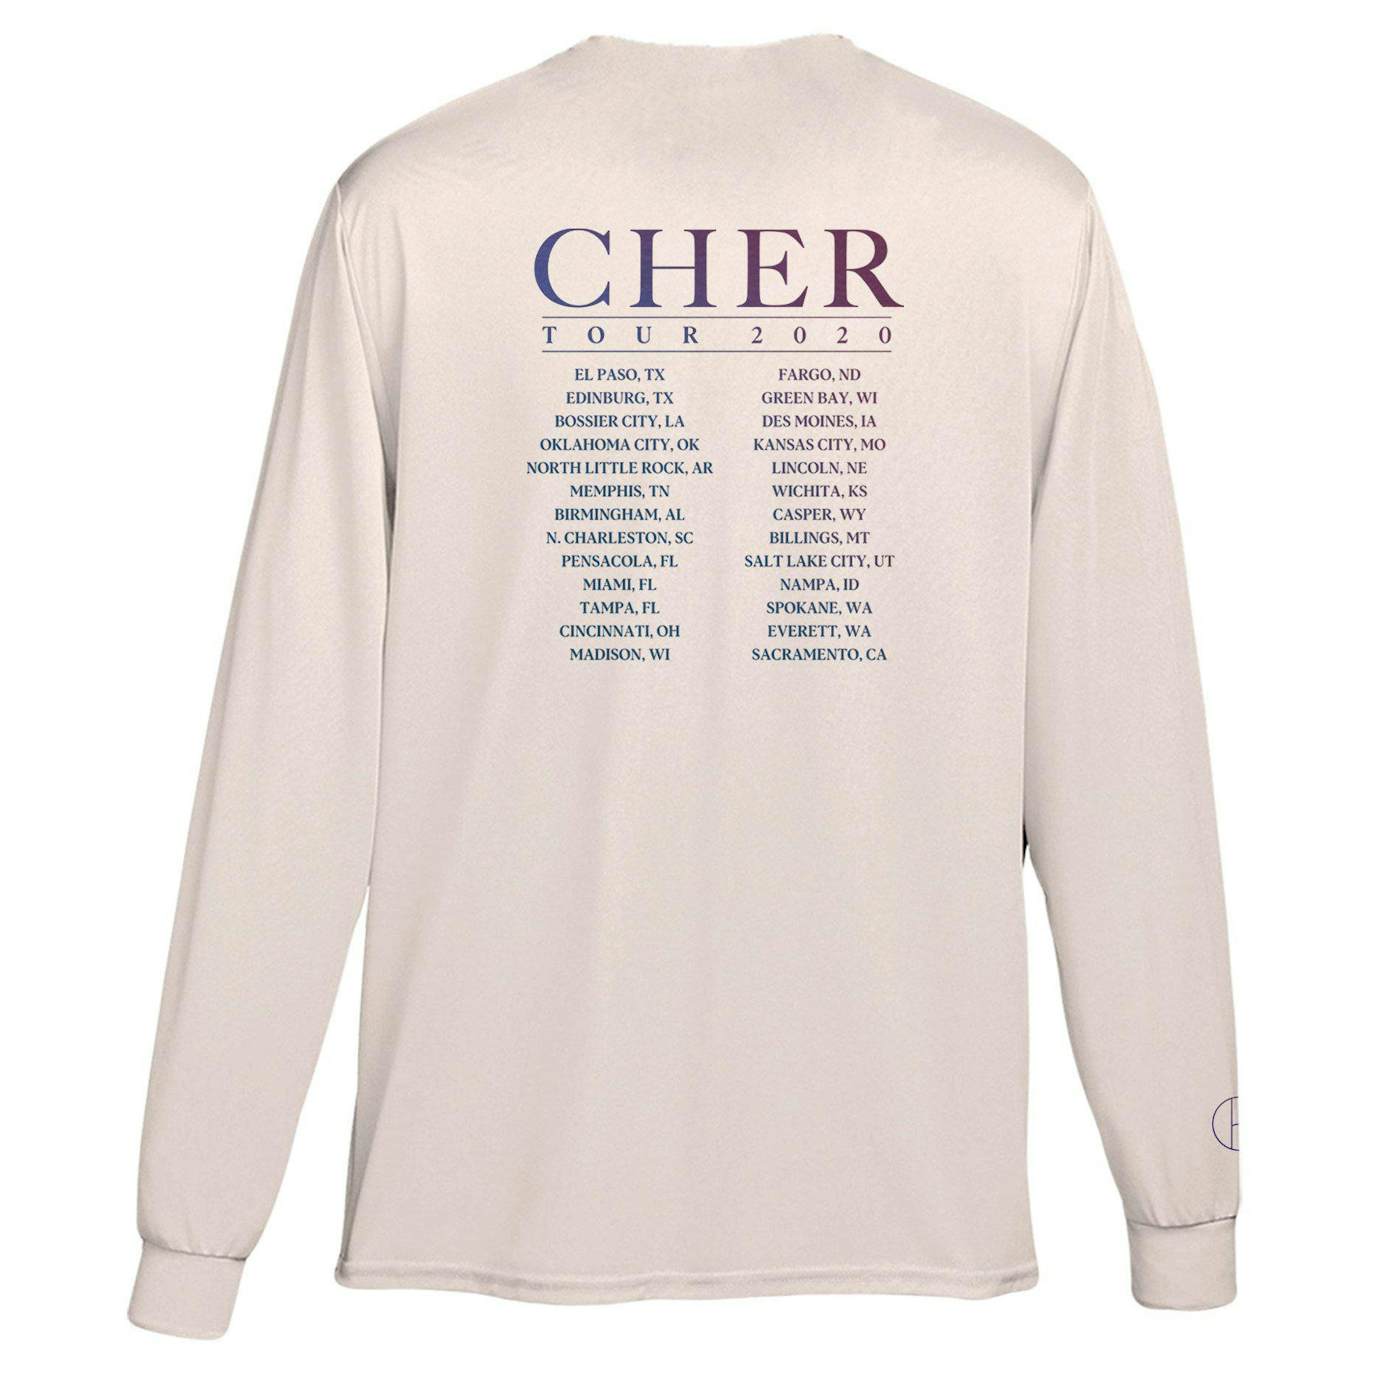 Cher Spring 2020 Long Sleeve photo tee